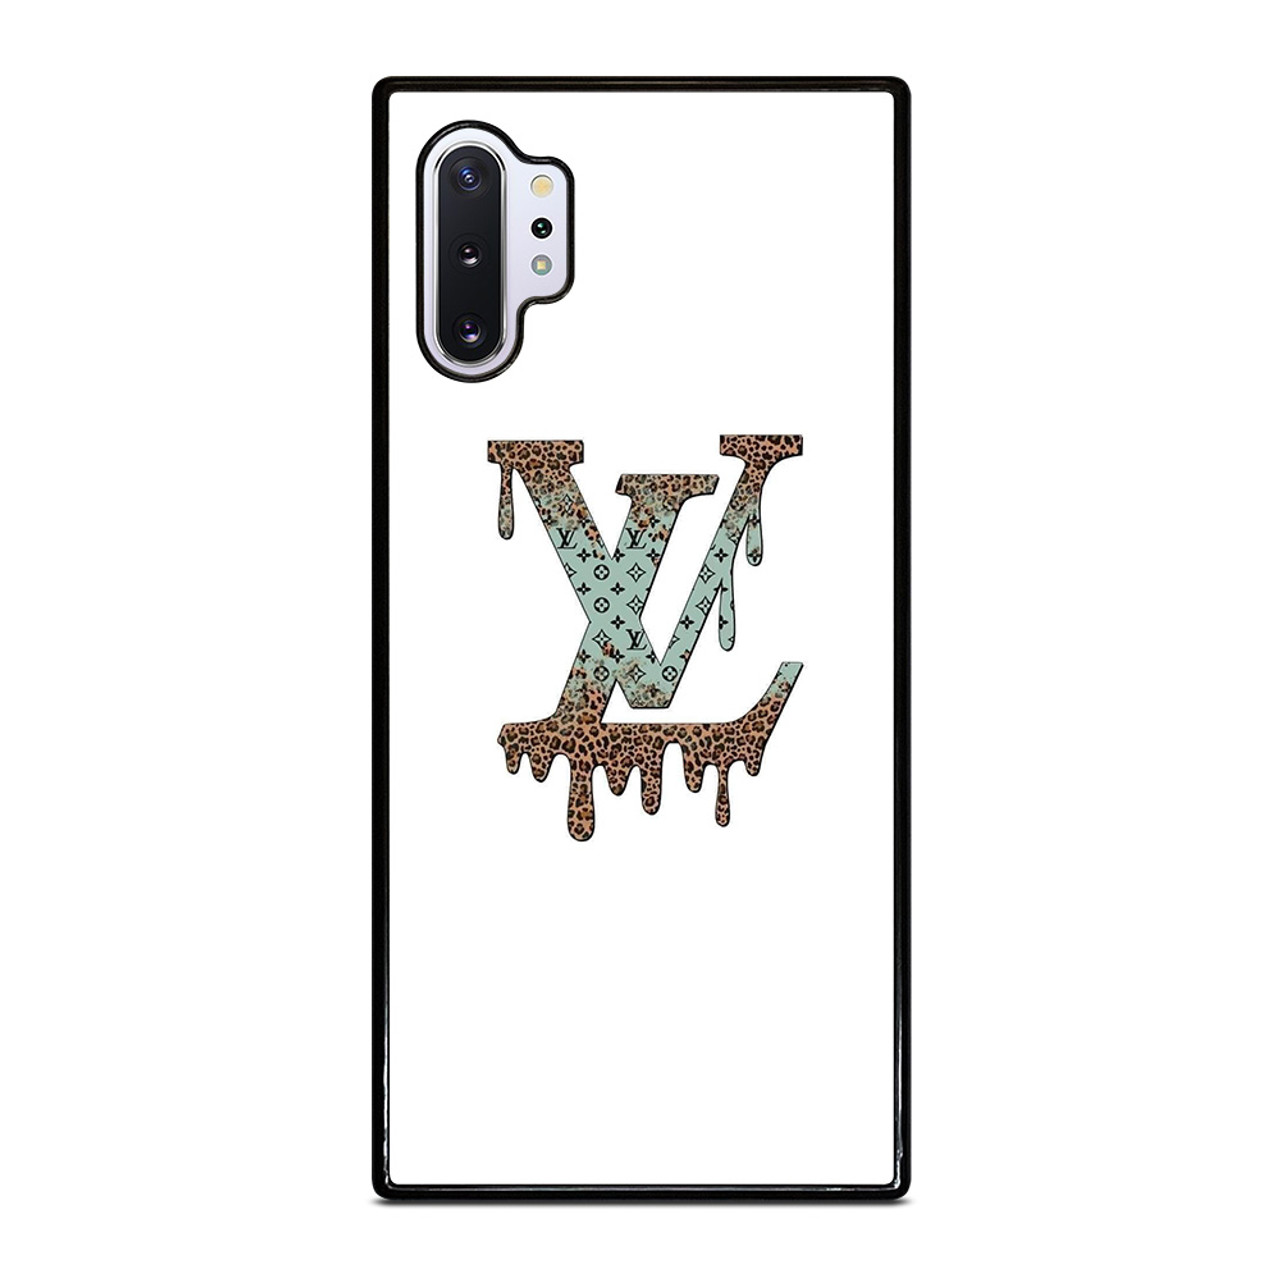 UNIQUE LOUIS VUITTON LV ICON PATTERN Samsung Galaxy Note 10 Plus Case Cover